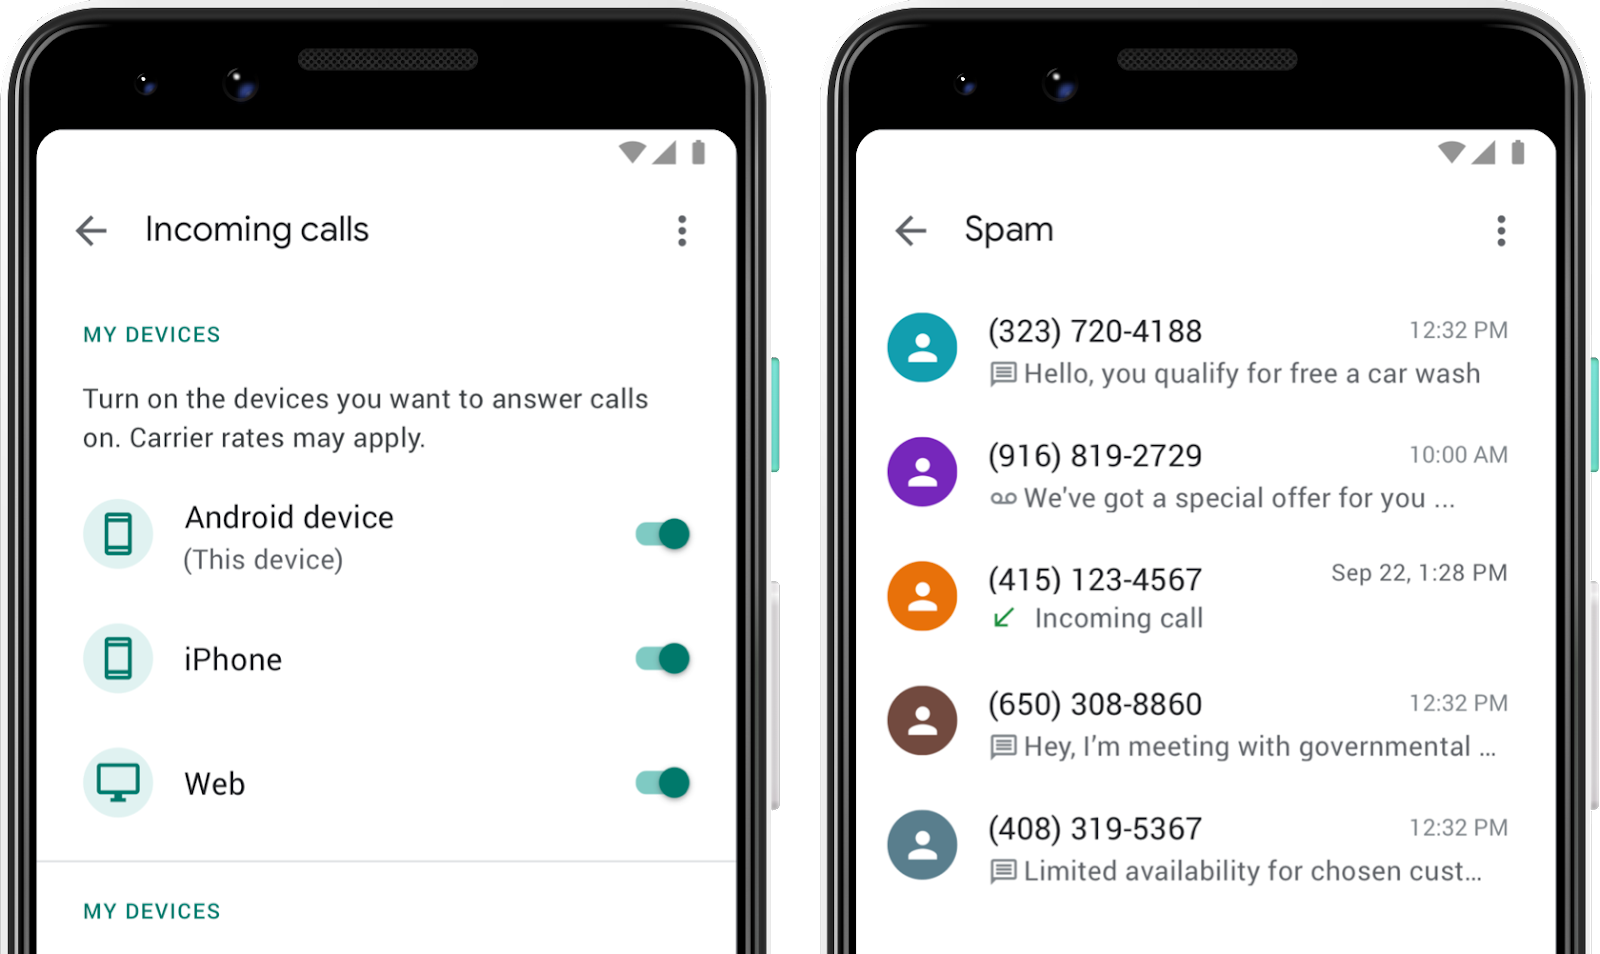 Google Voice Spam Calls